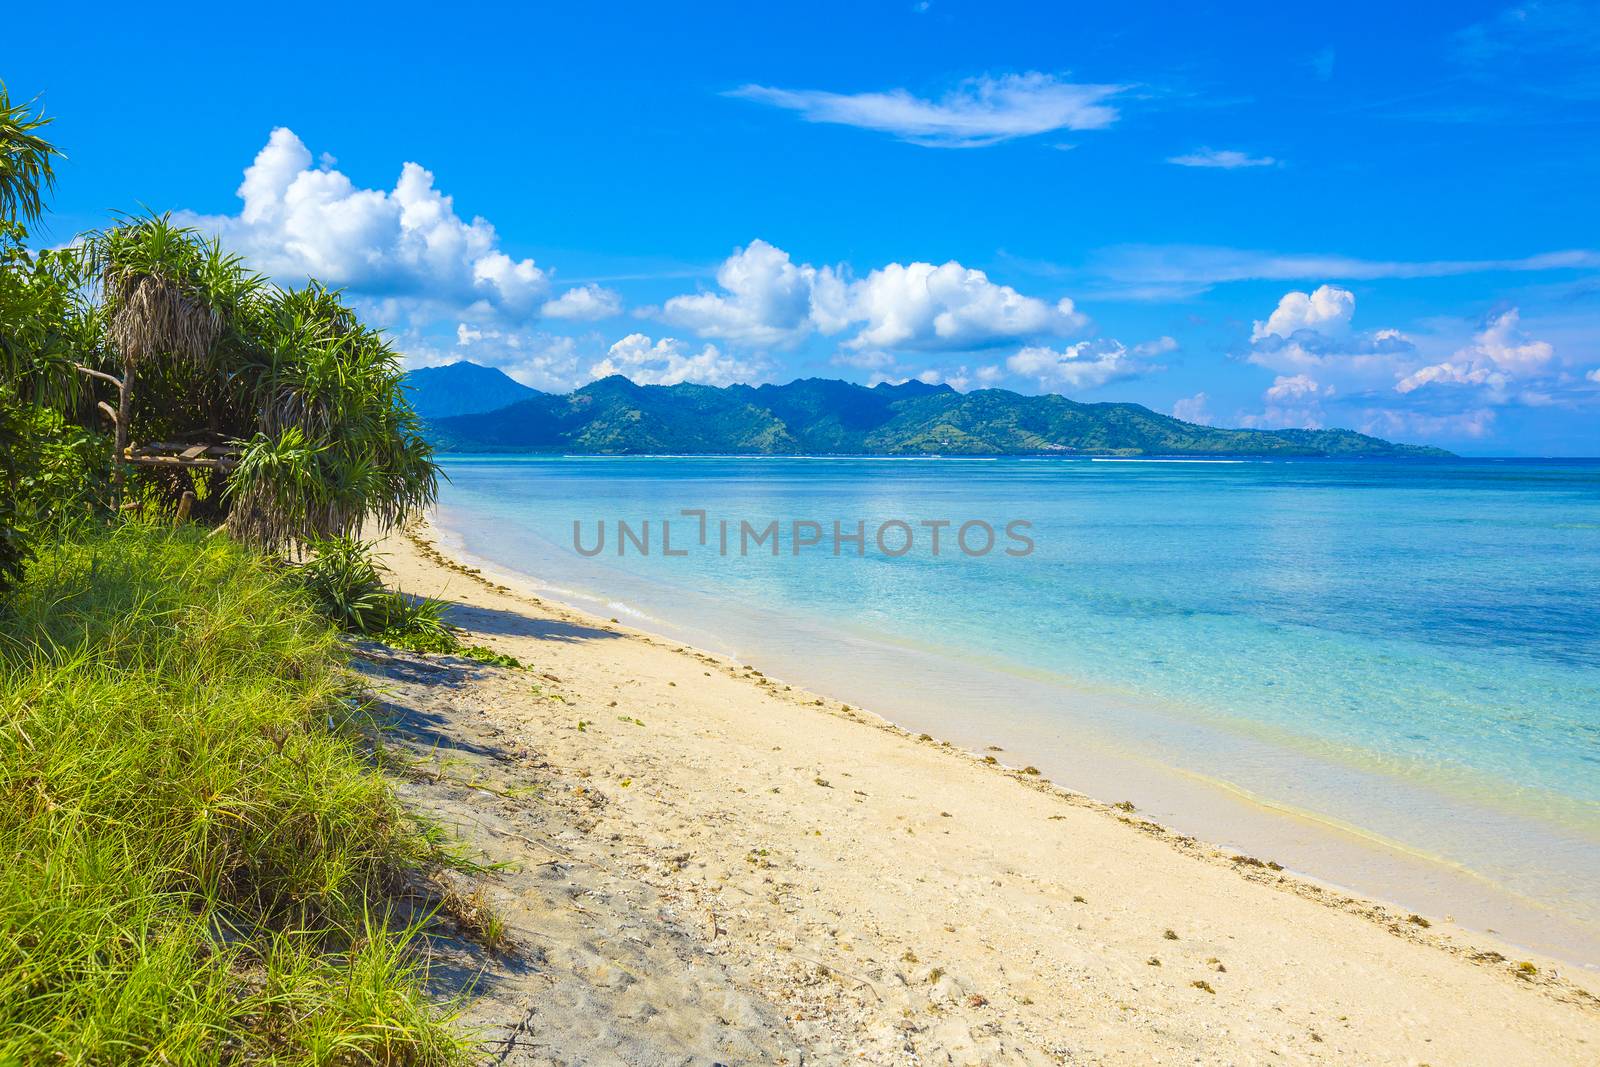 Beautiful sea and coastlines of Gili islands, Indonesia.